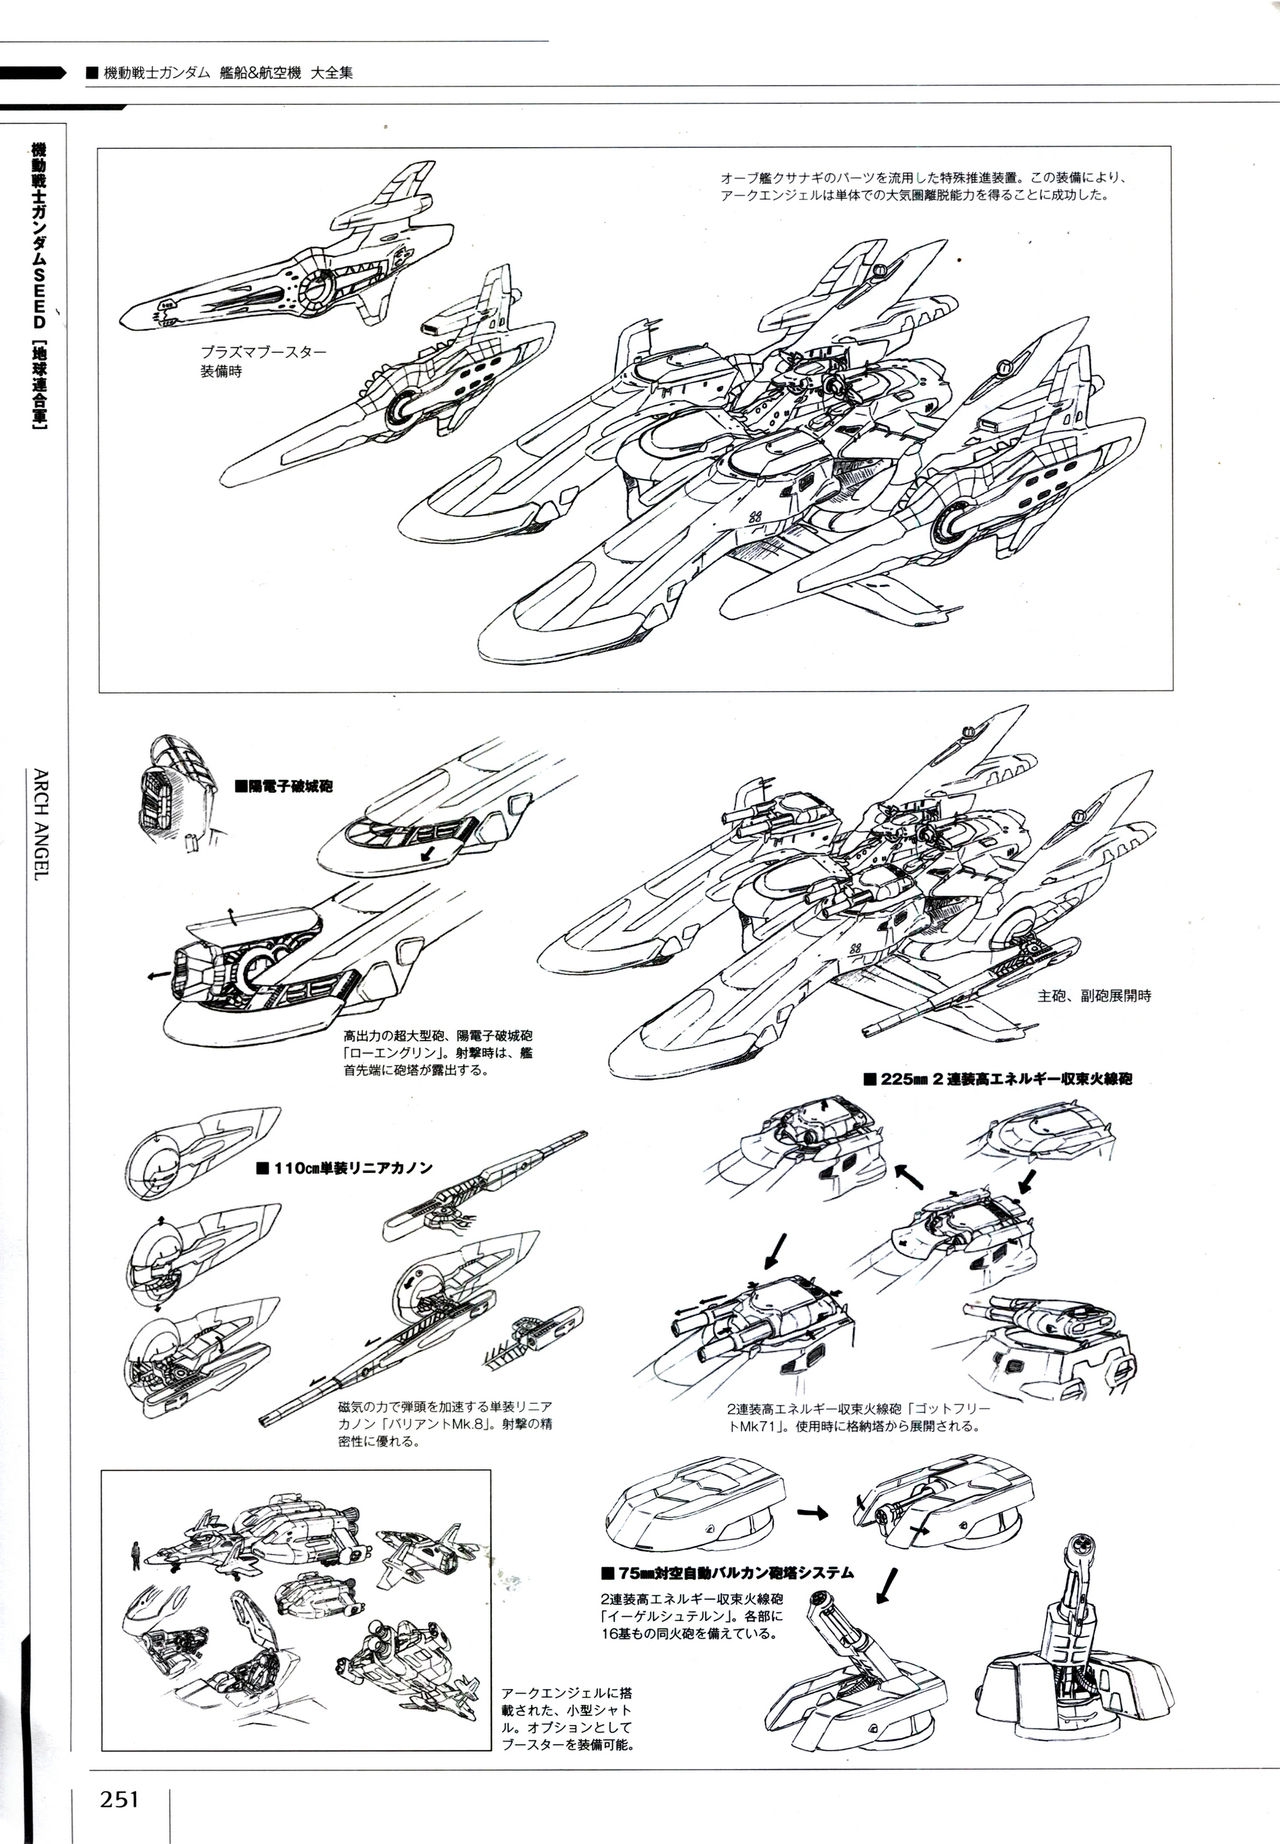 Mobile Suit Gundam - Ship & Aerospace Plane Encyclopedia - Revised Edition 256